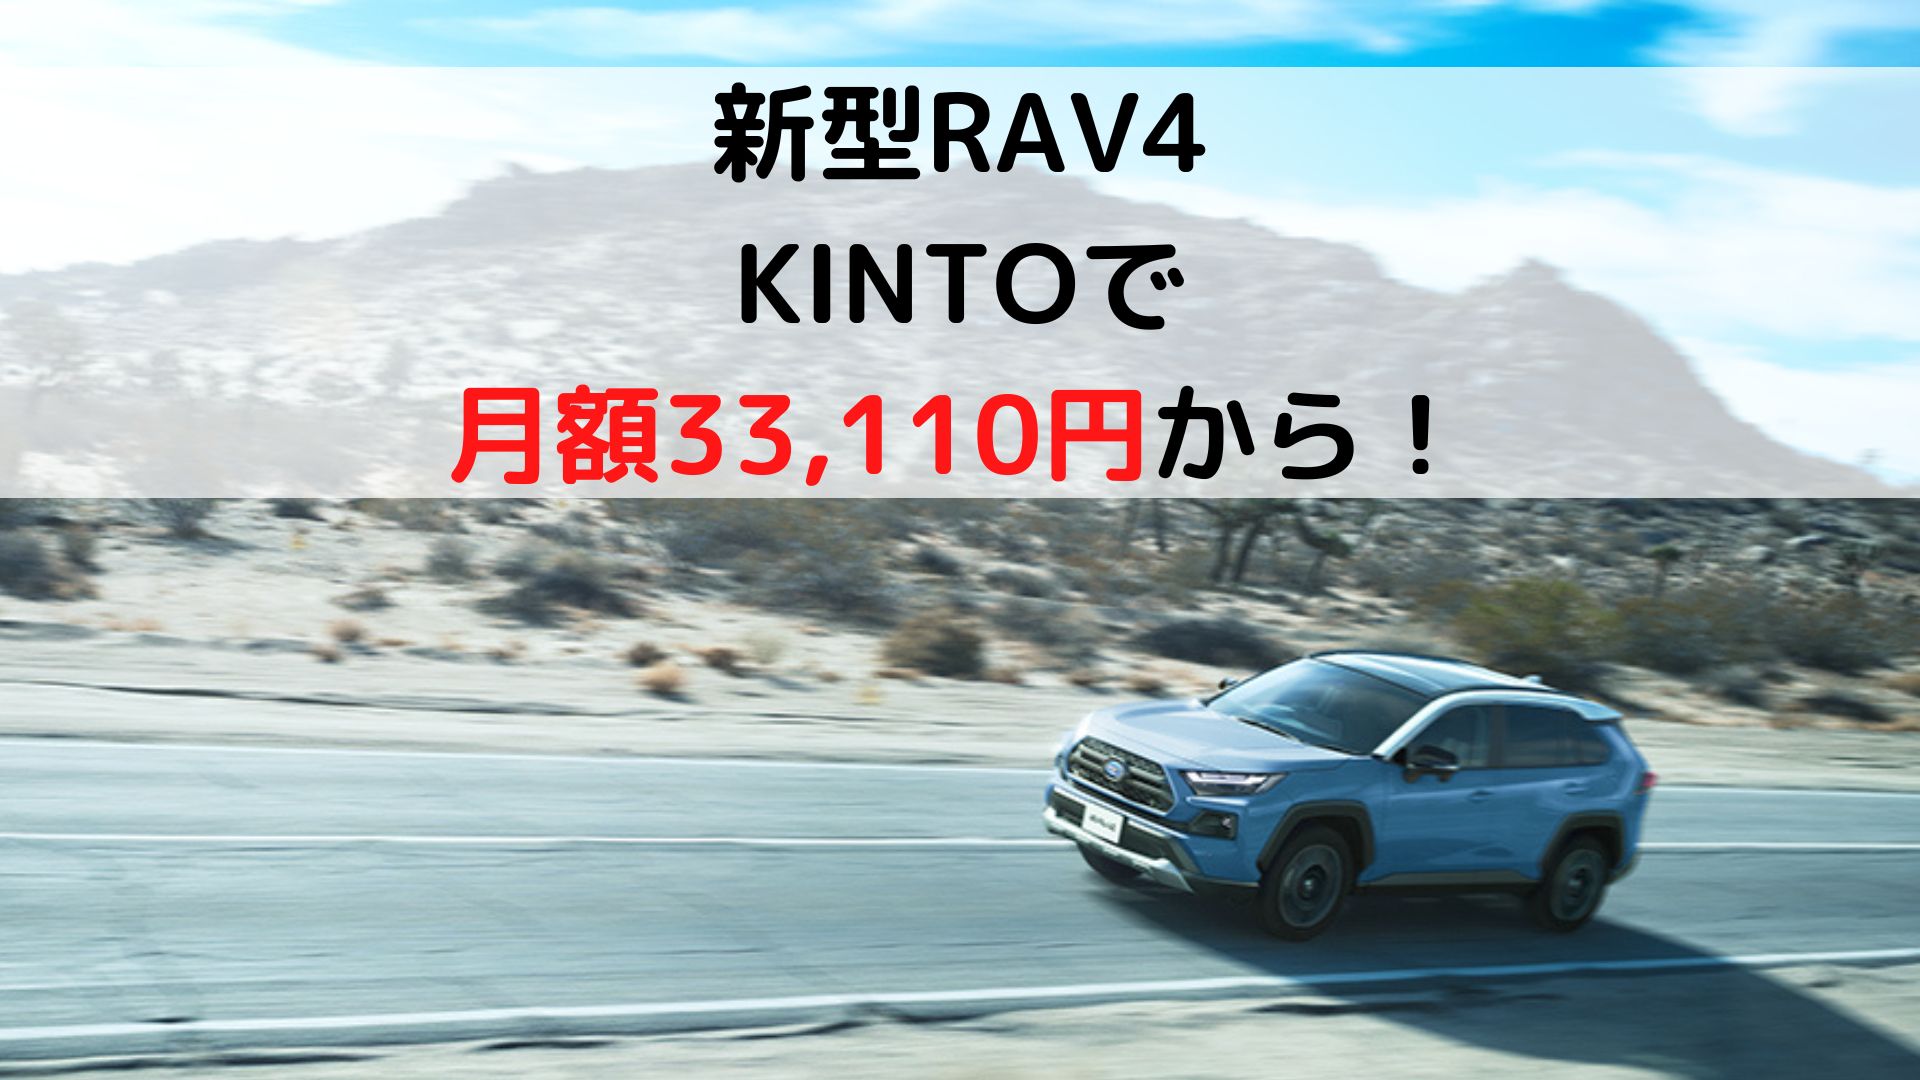 Kinto-RAV4